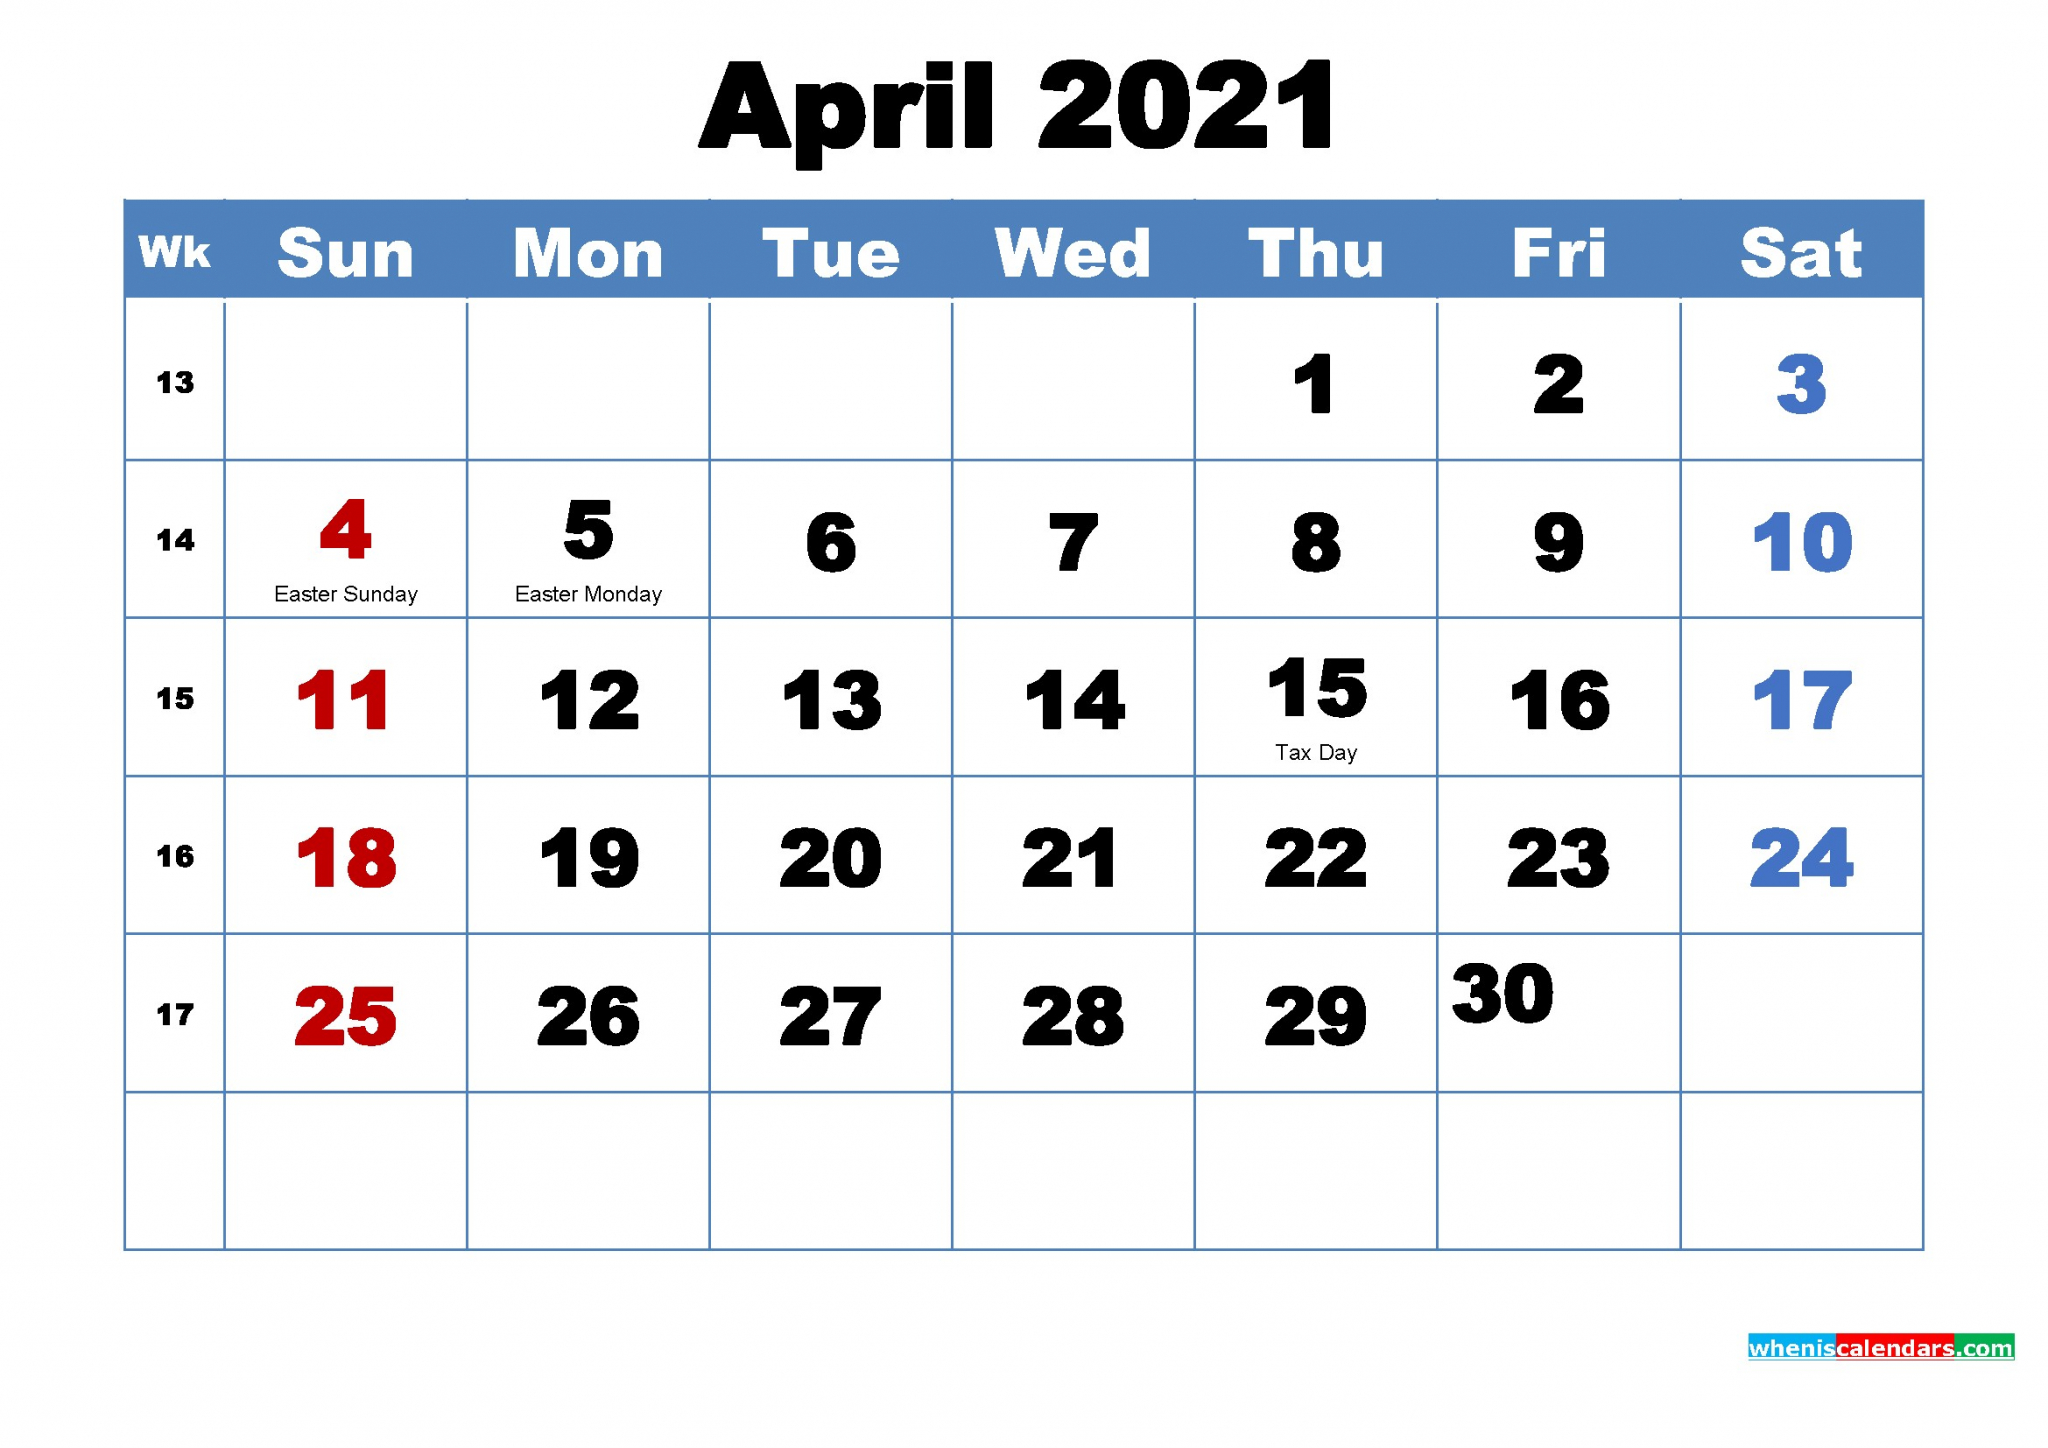 April 2021 Calendar With Holidays - Calendar 2021